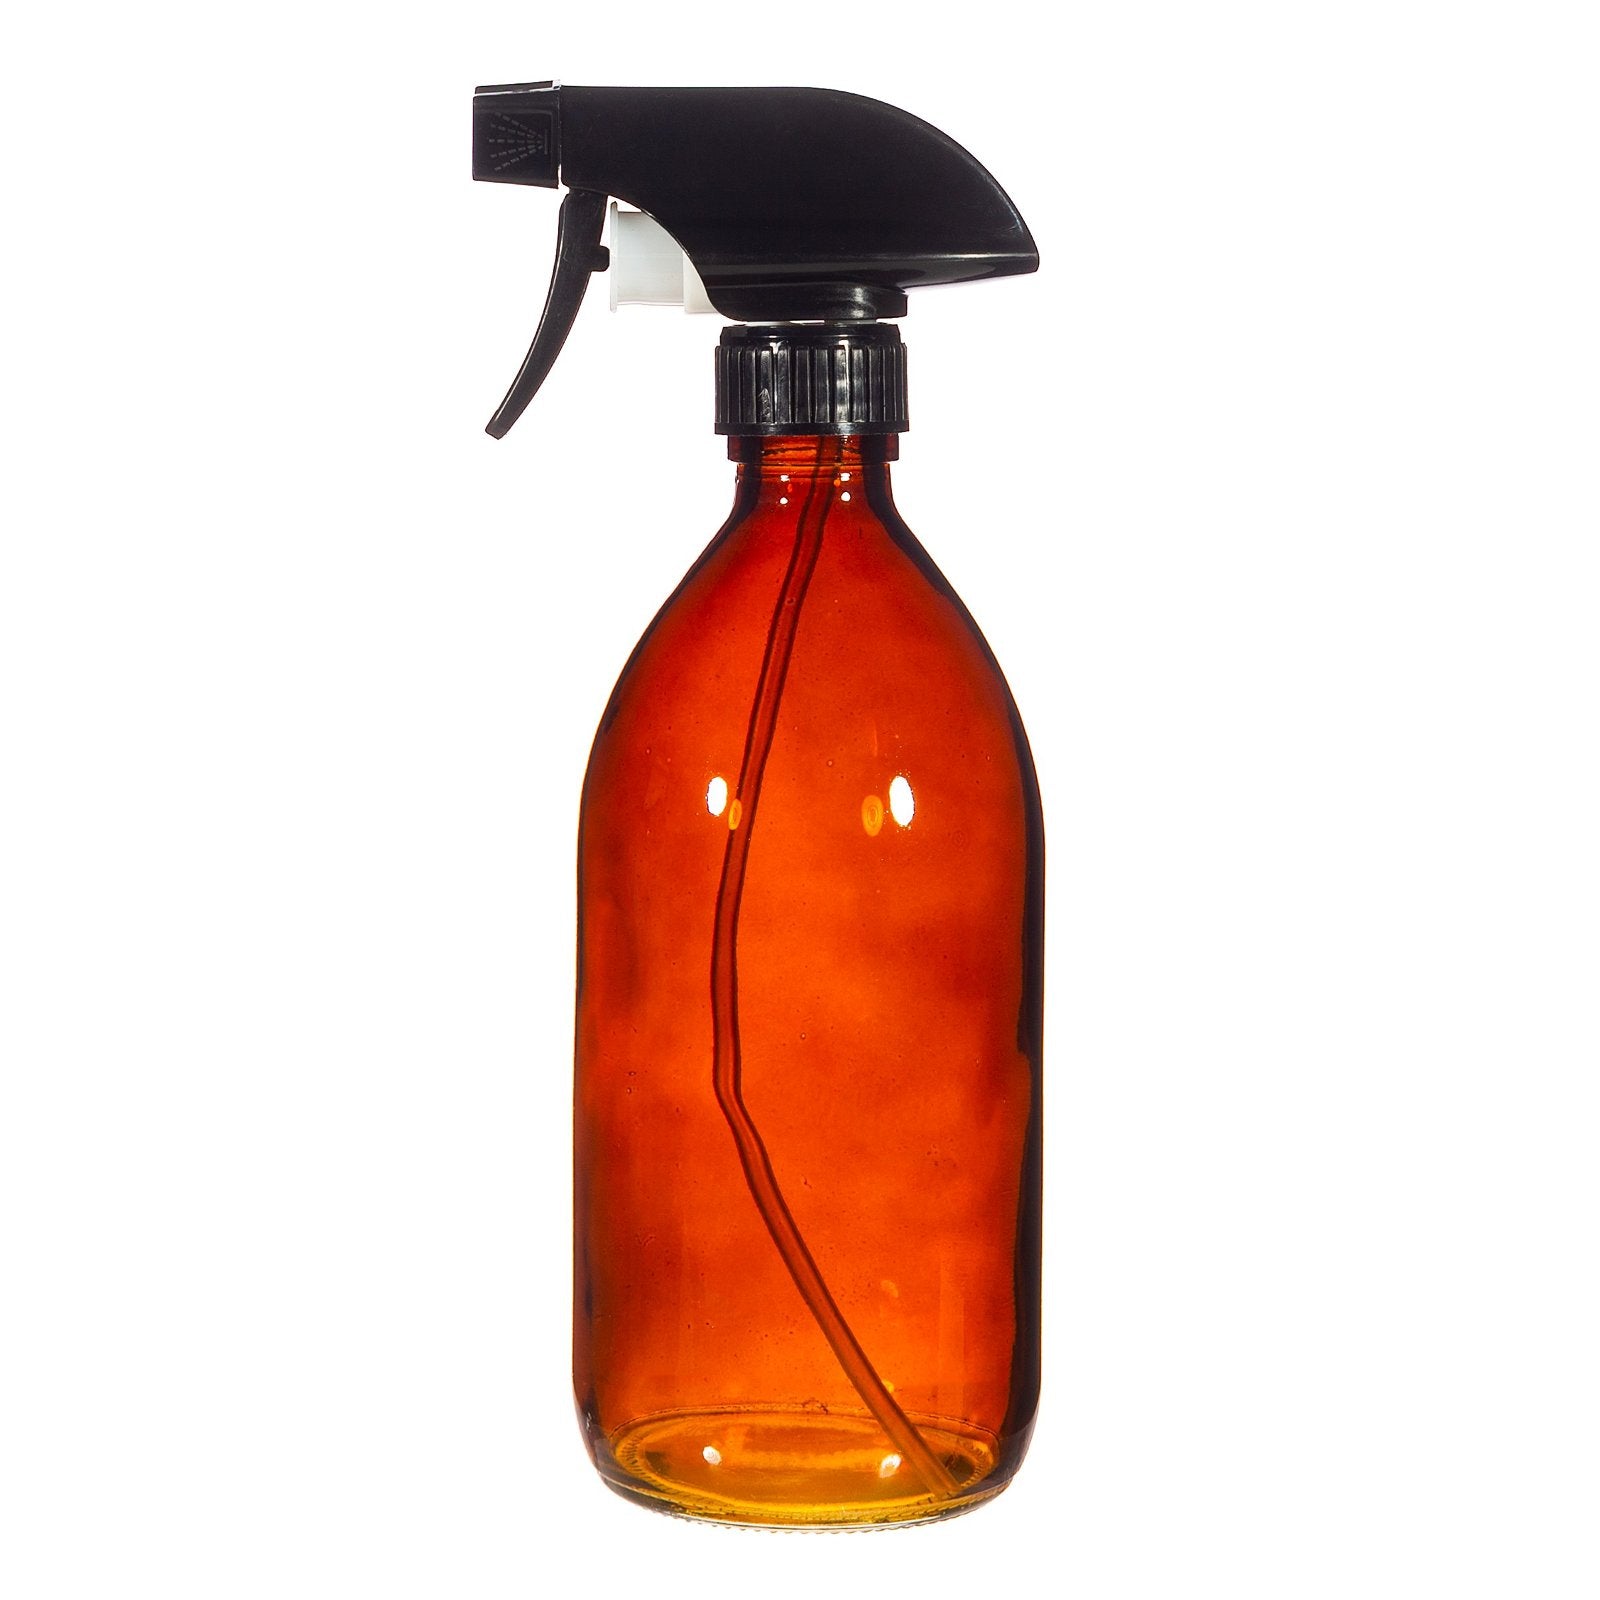 An amber coloured spray bottle.